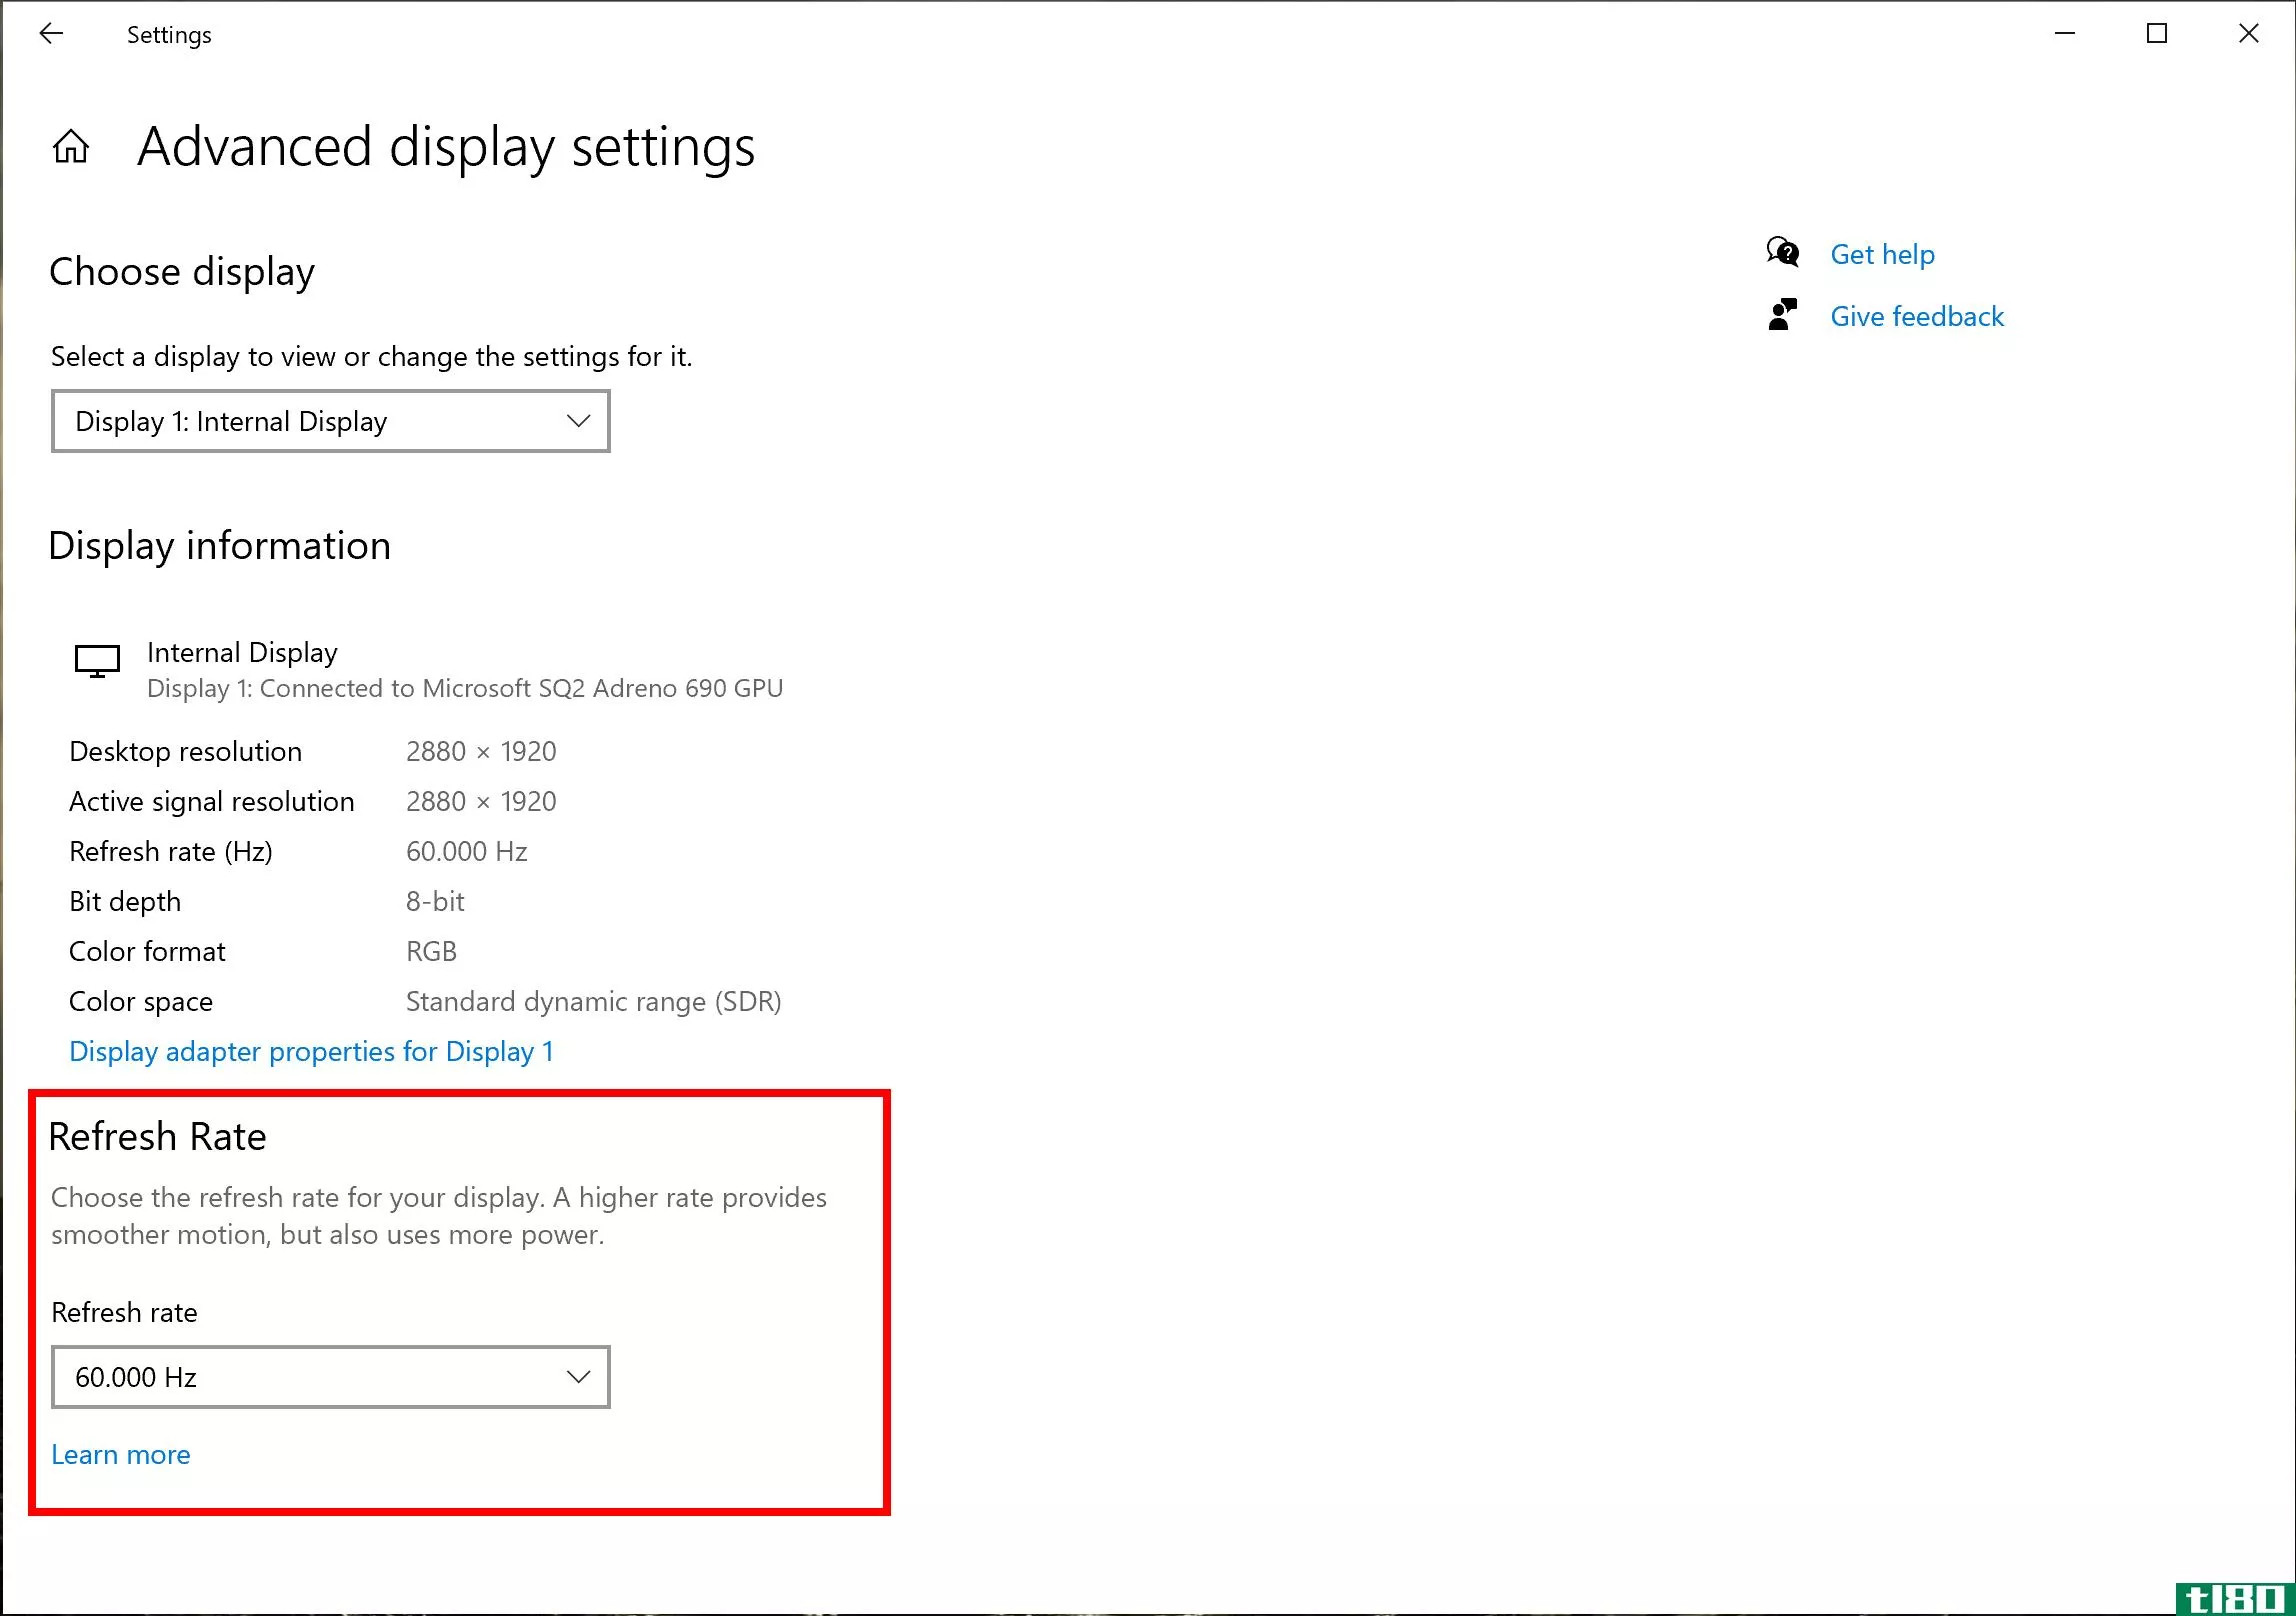 The new refresh adjustment setting in Windows 10 Insider